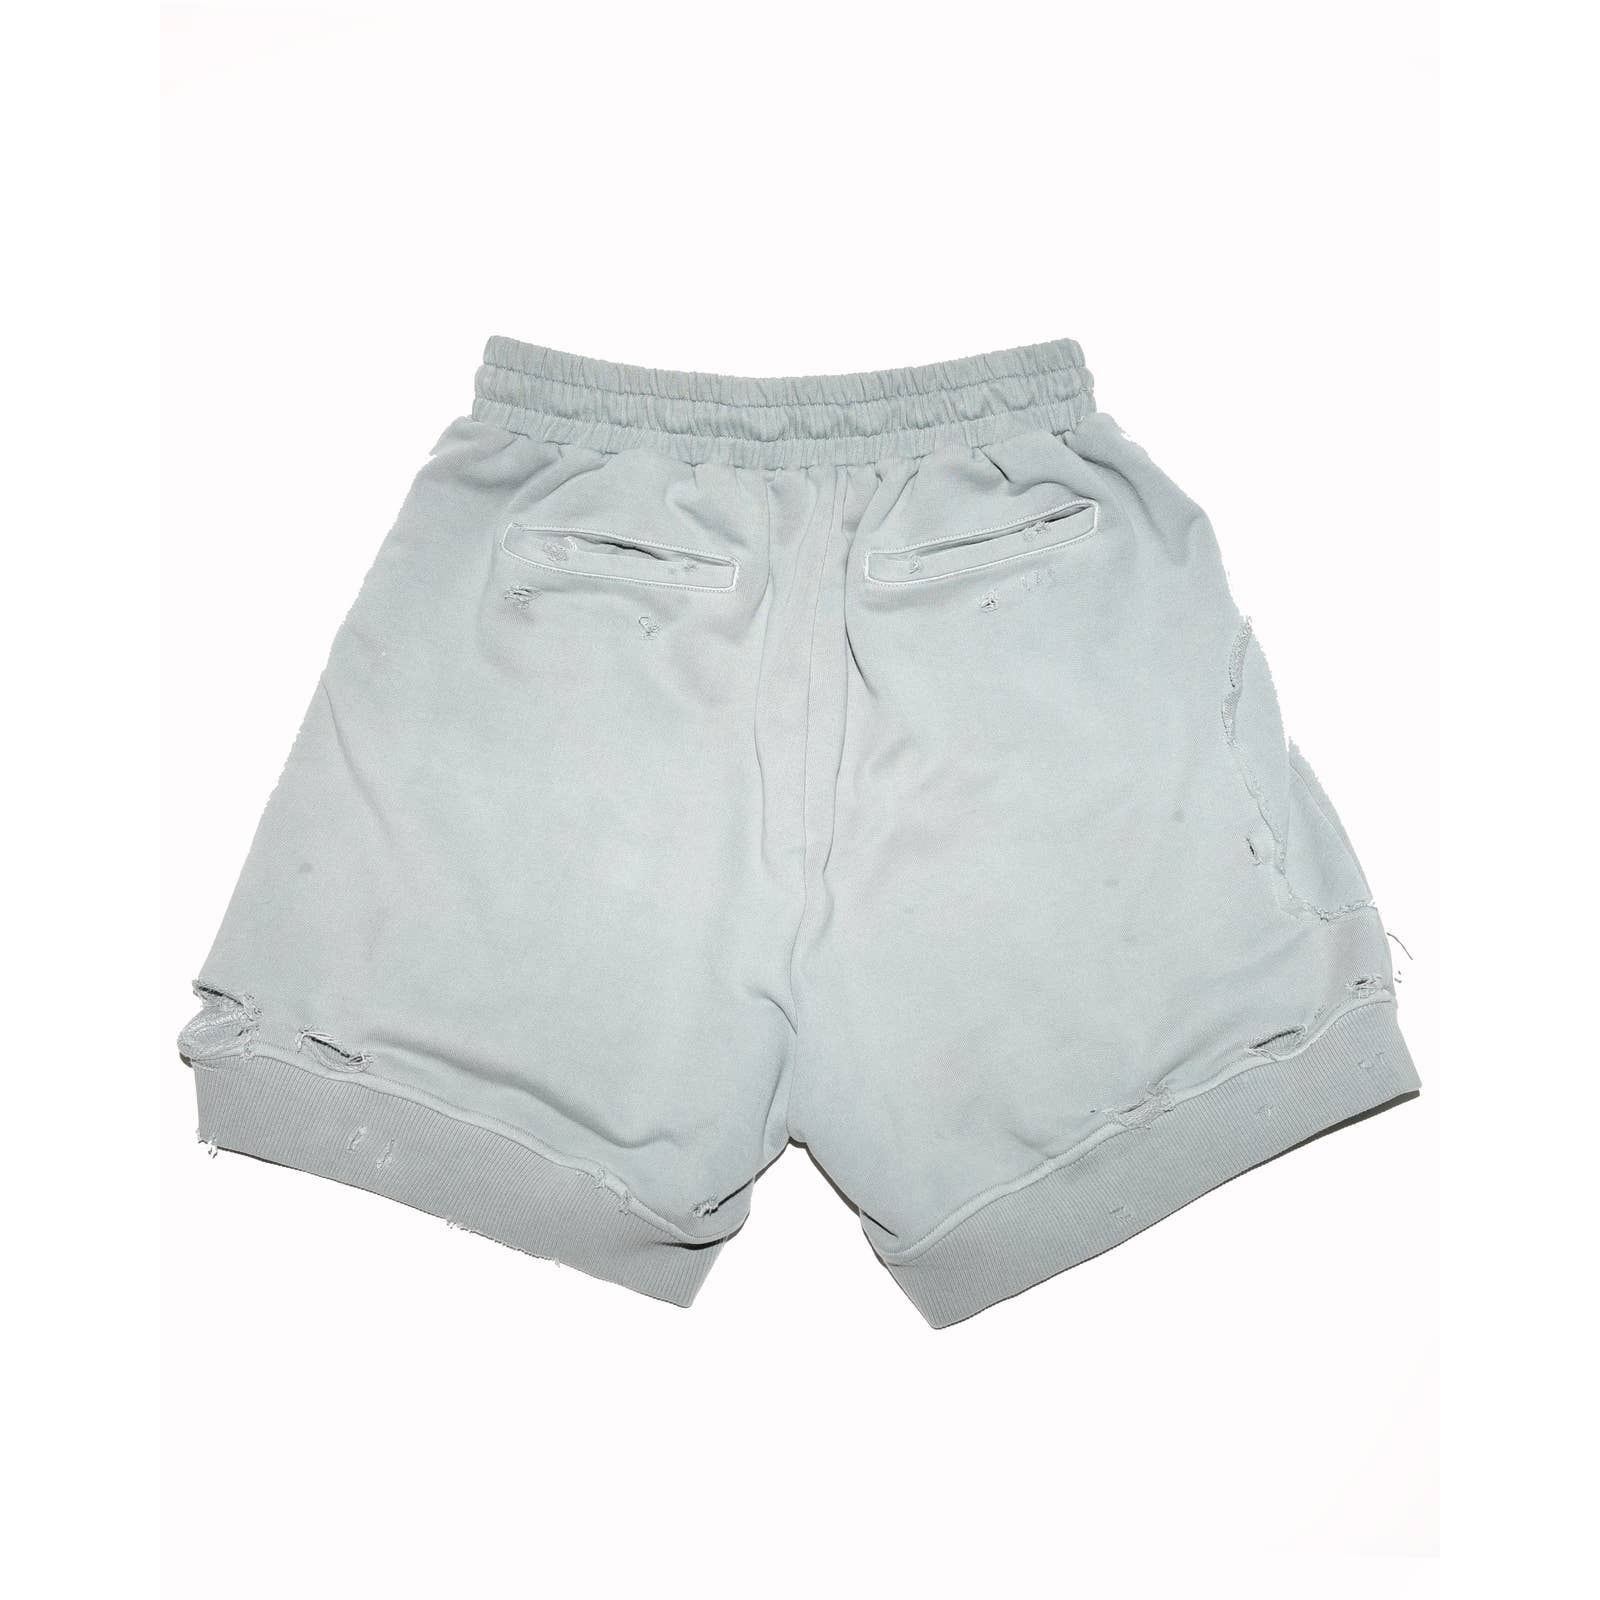 C2H4 Distressed Sweat Shorts - 2